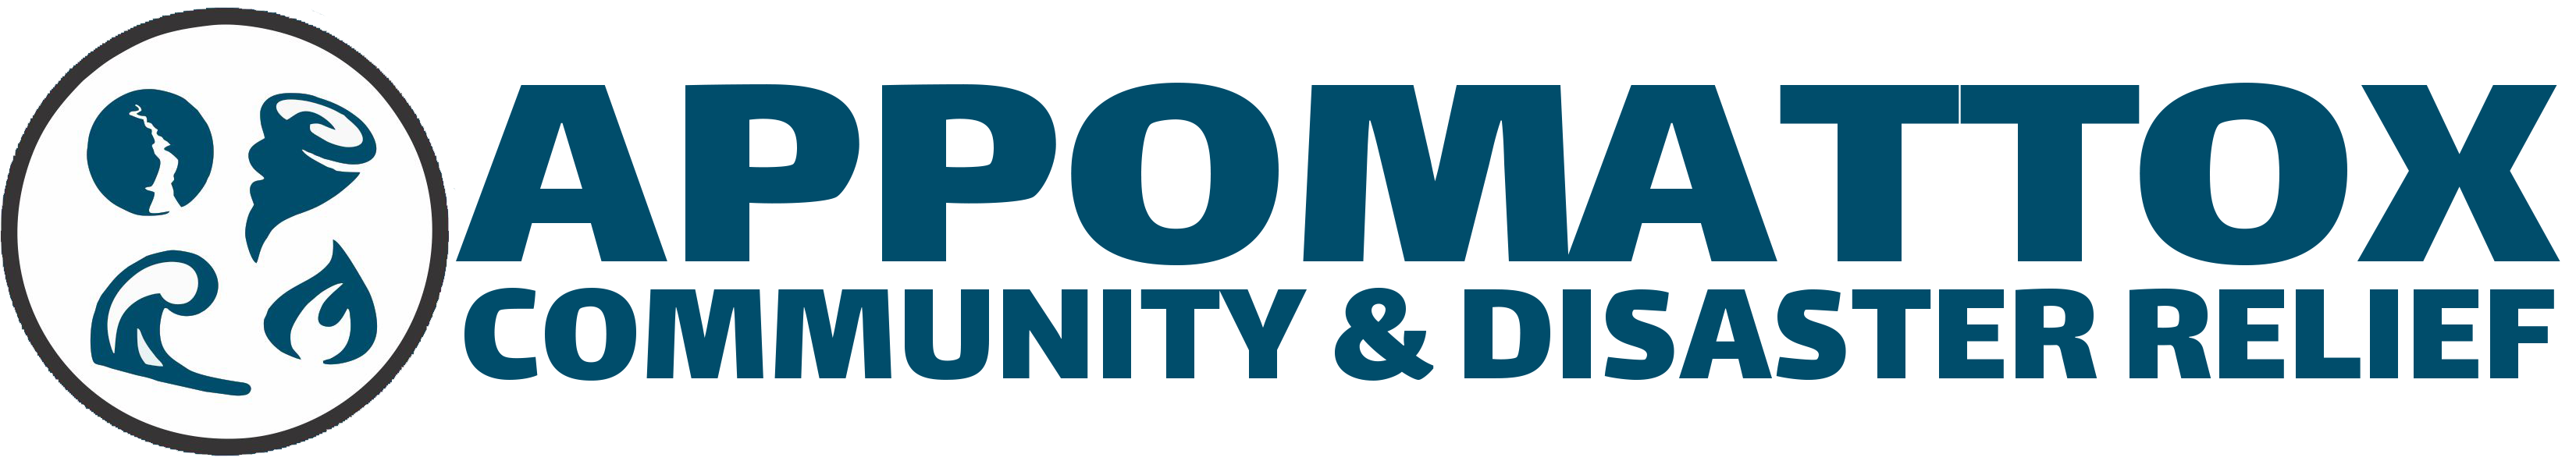 Appomattox Community & Disaster Relief Organization logo